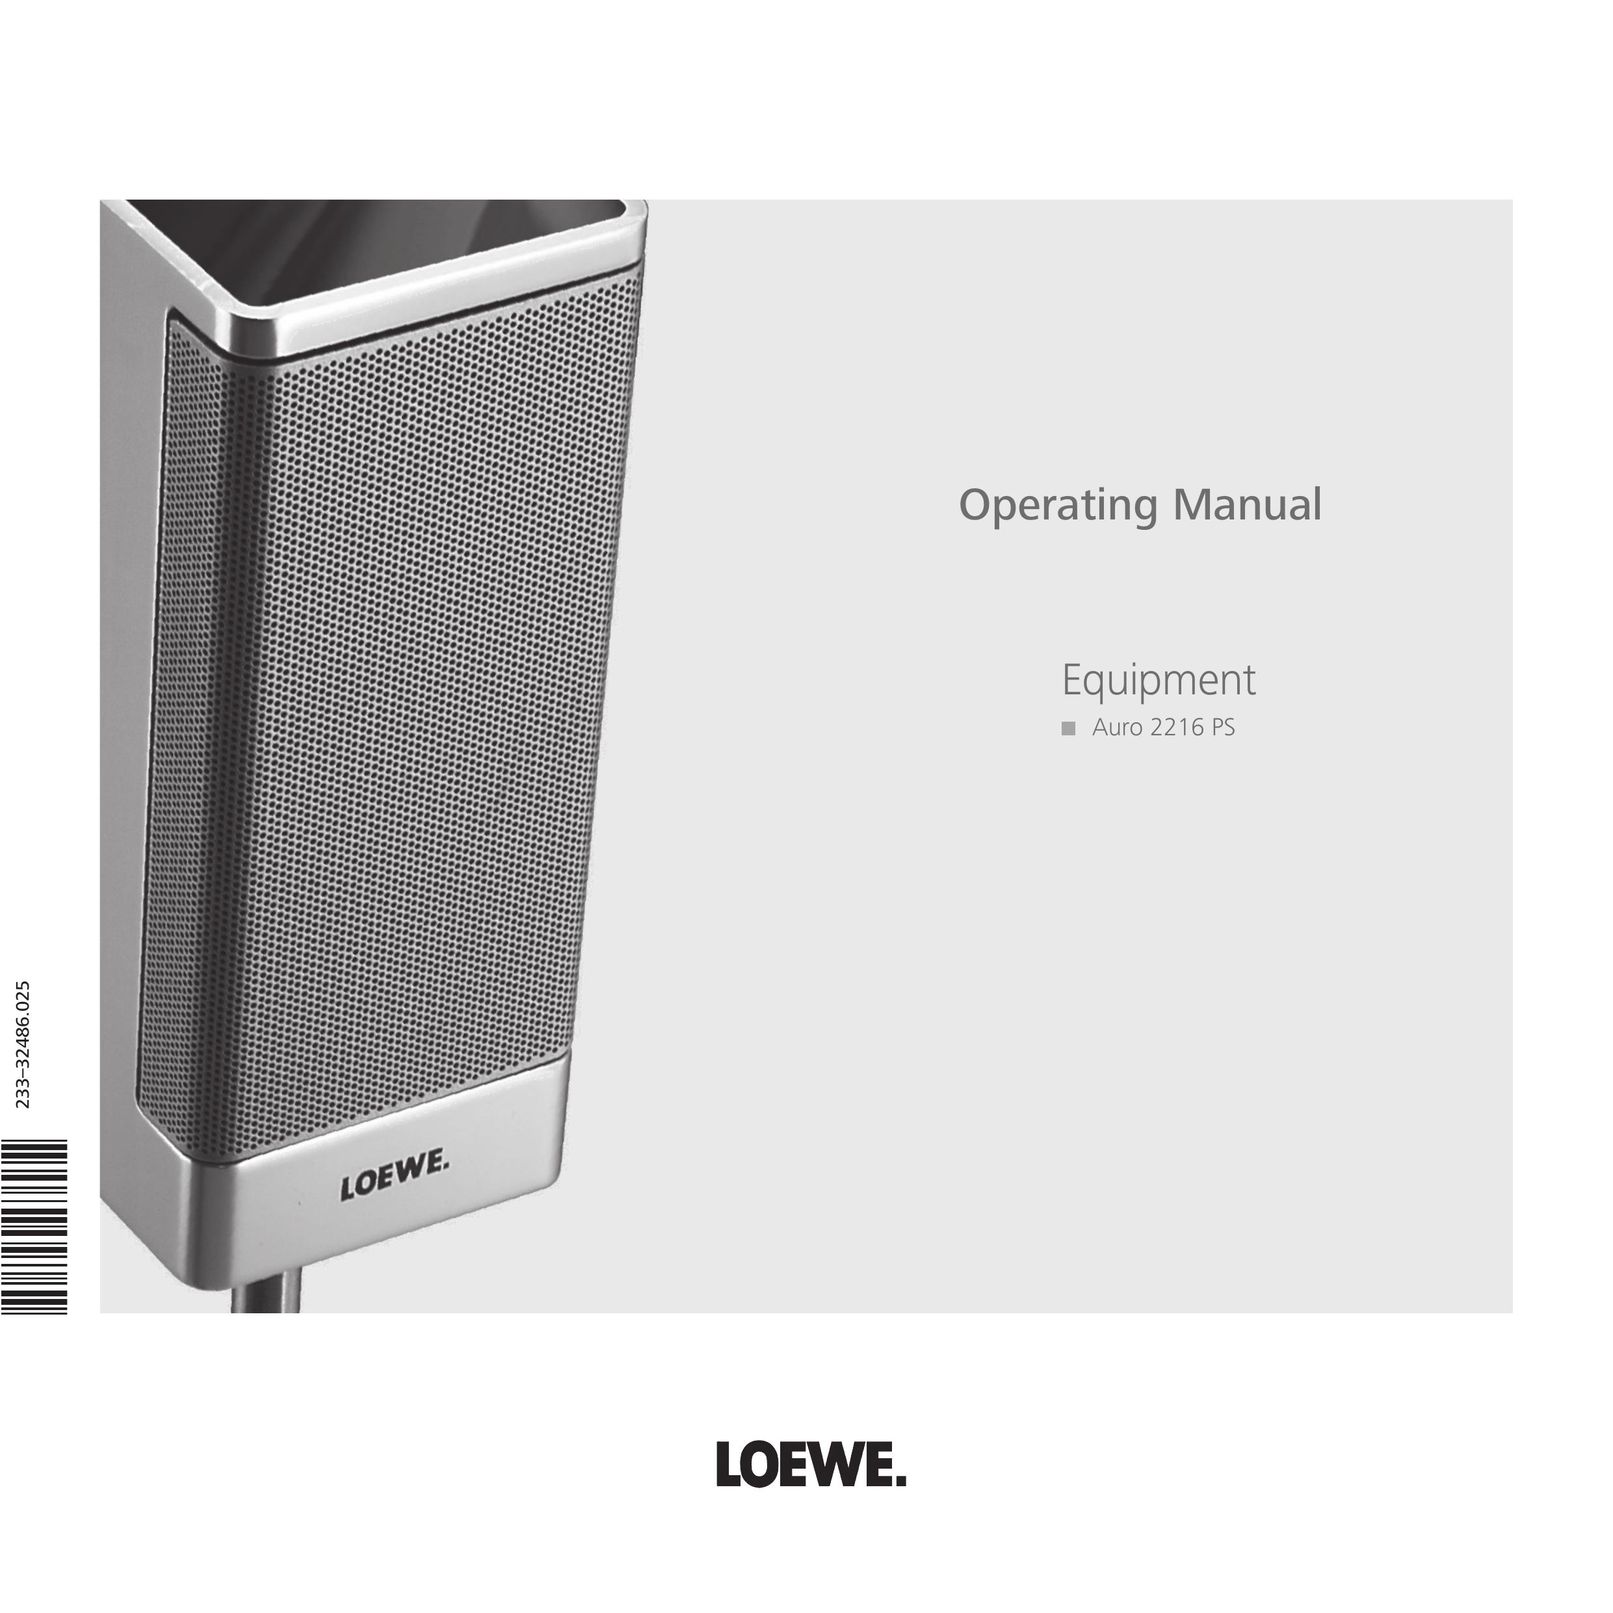 Loewe Auro 2216 PS Portable Speaker User Manual